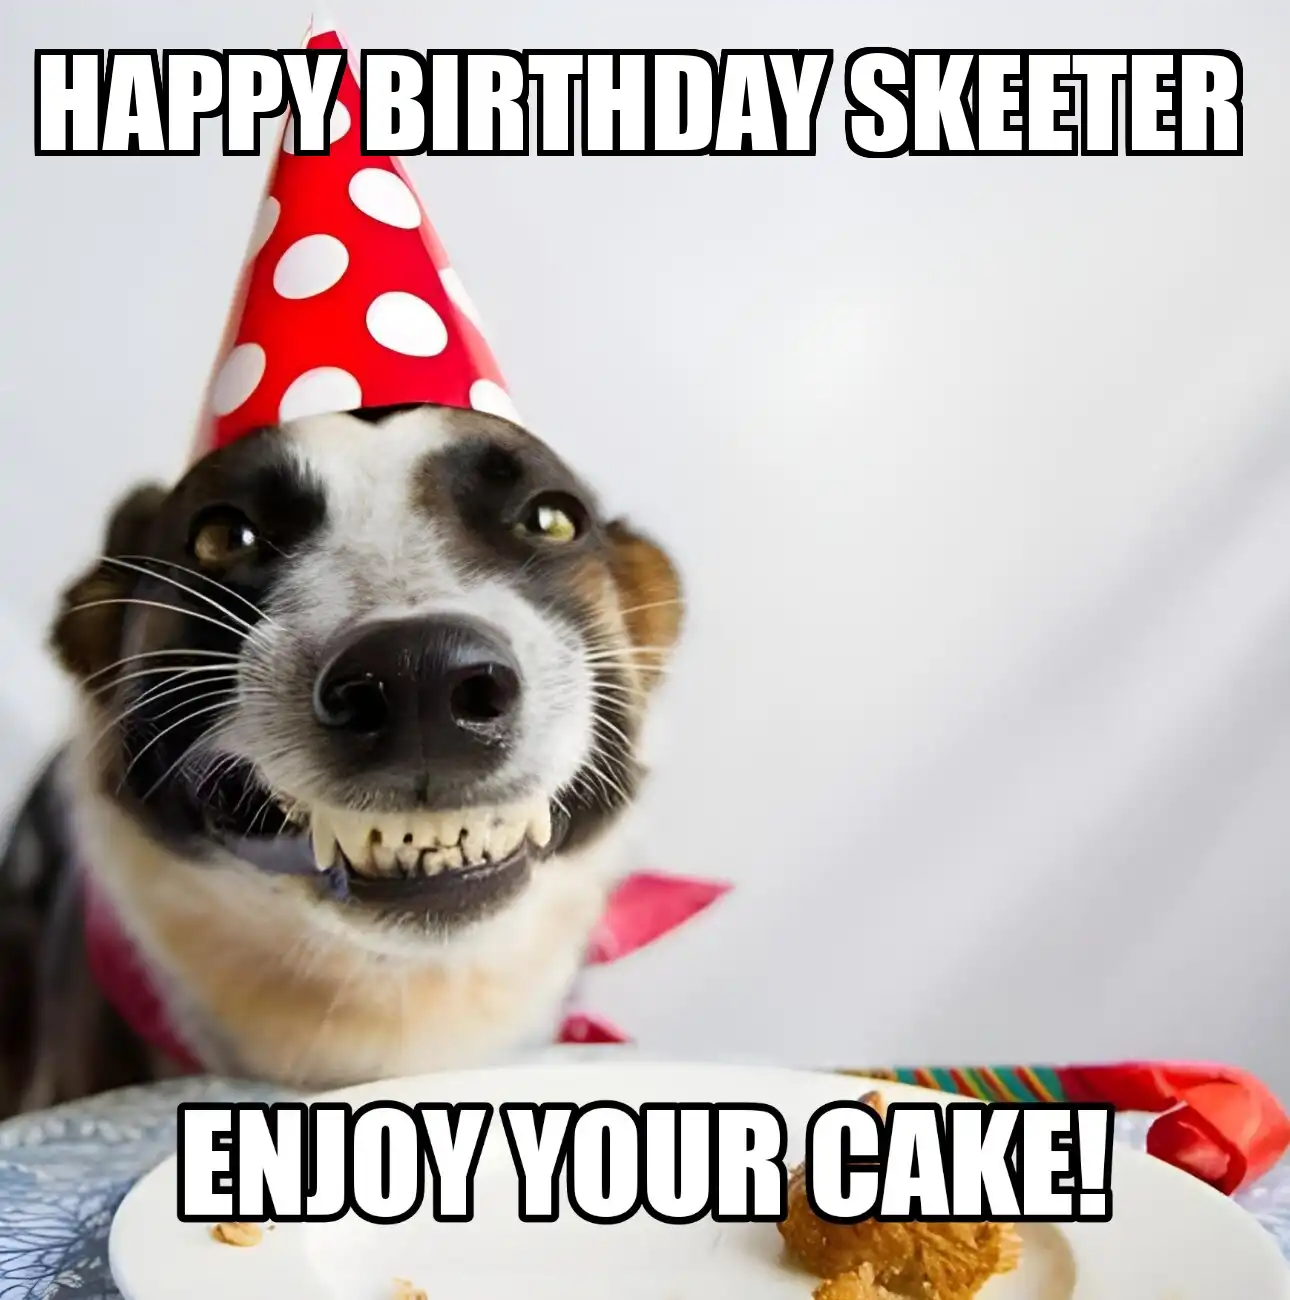 Happy Birthday Skeeter Enjoy Your Cake Dog Meme